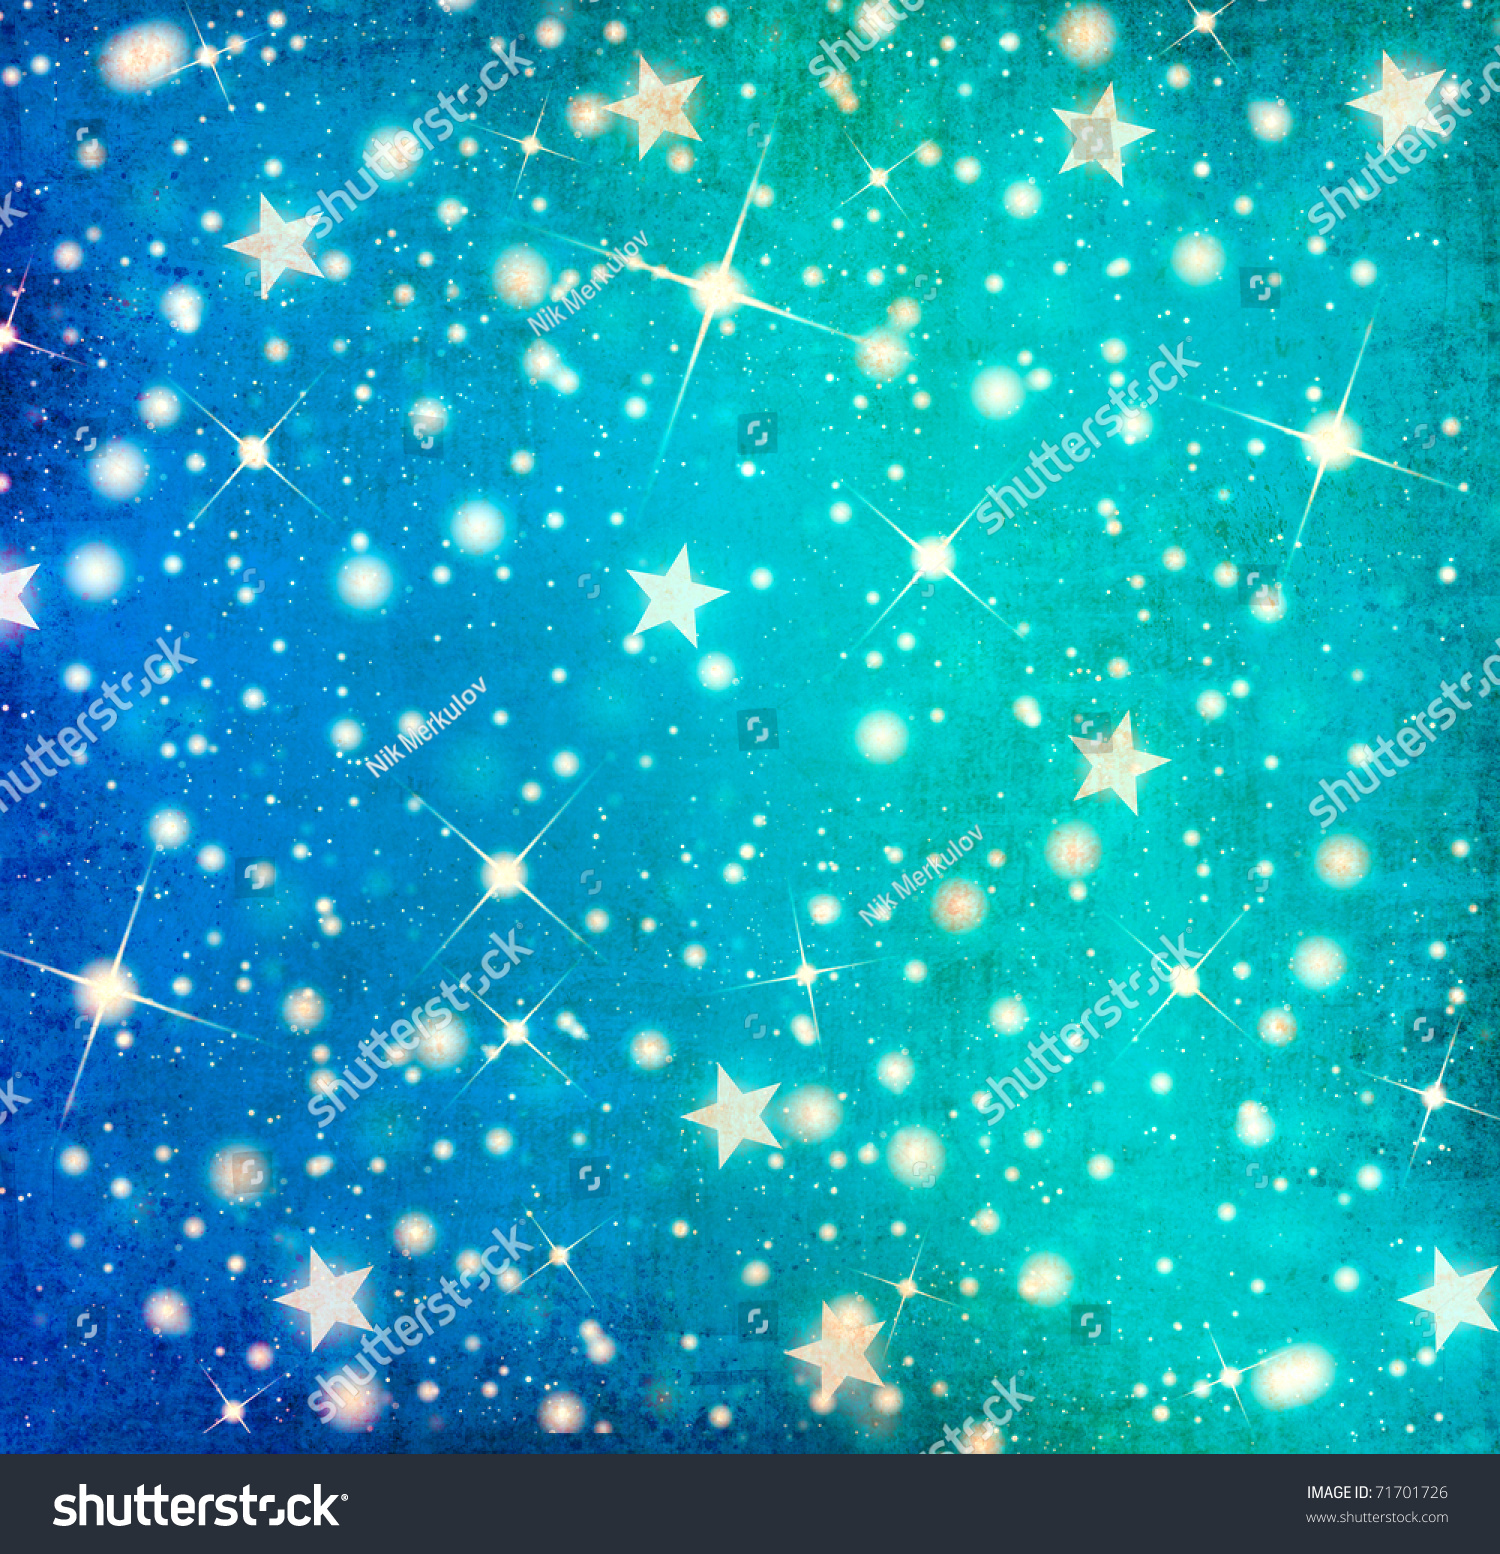 Grunge Stars Background Stock Photo 71701726 : Shutterstock